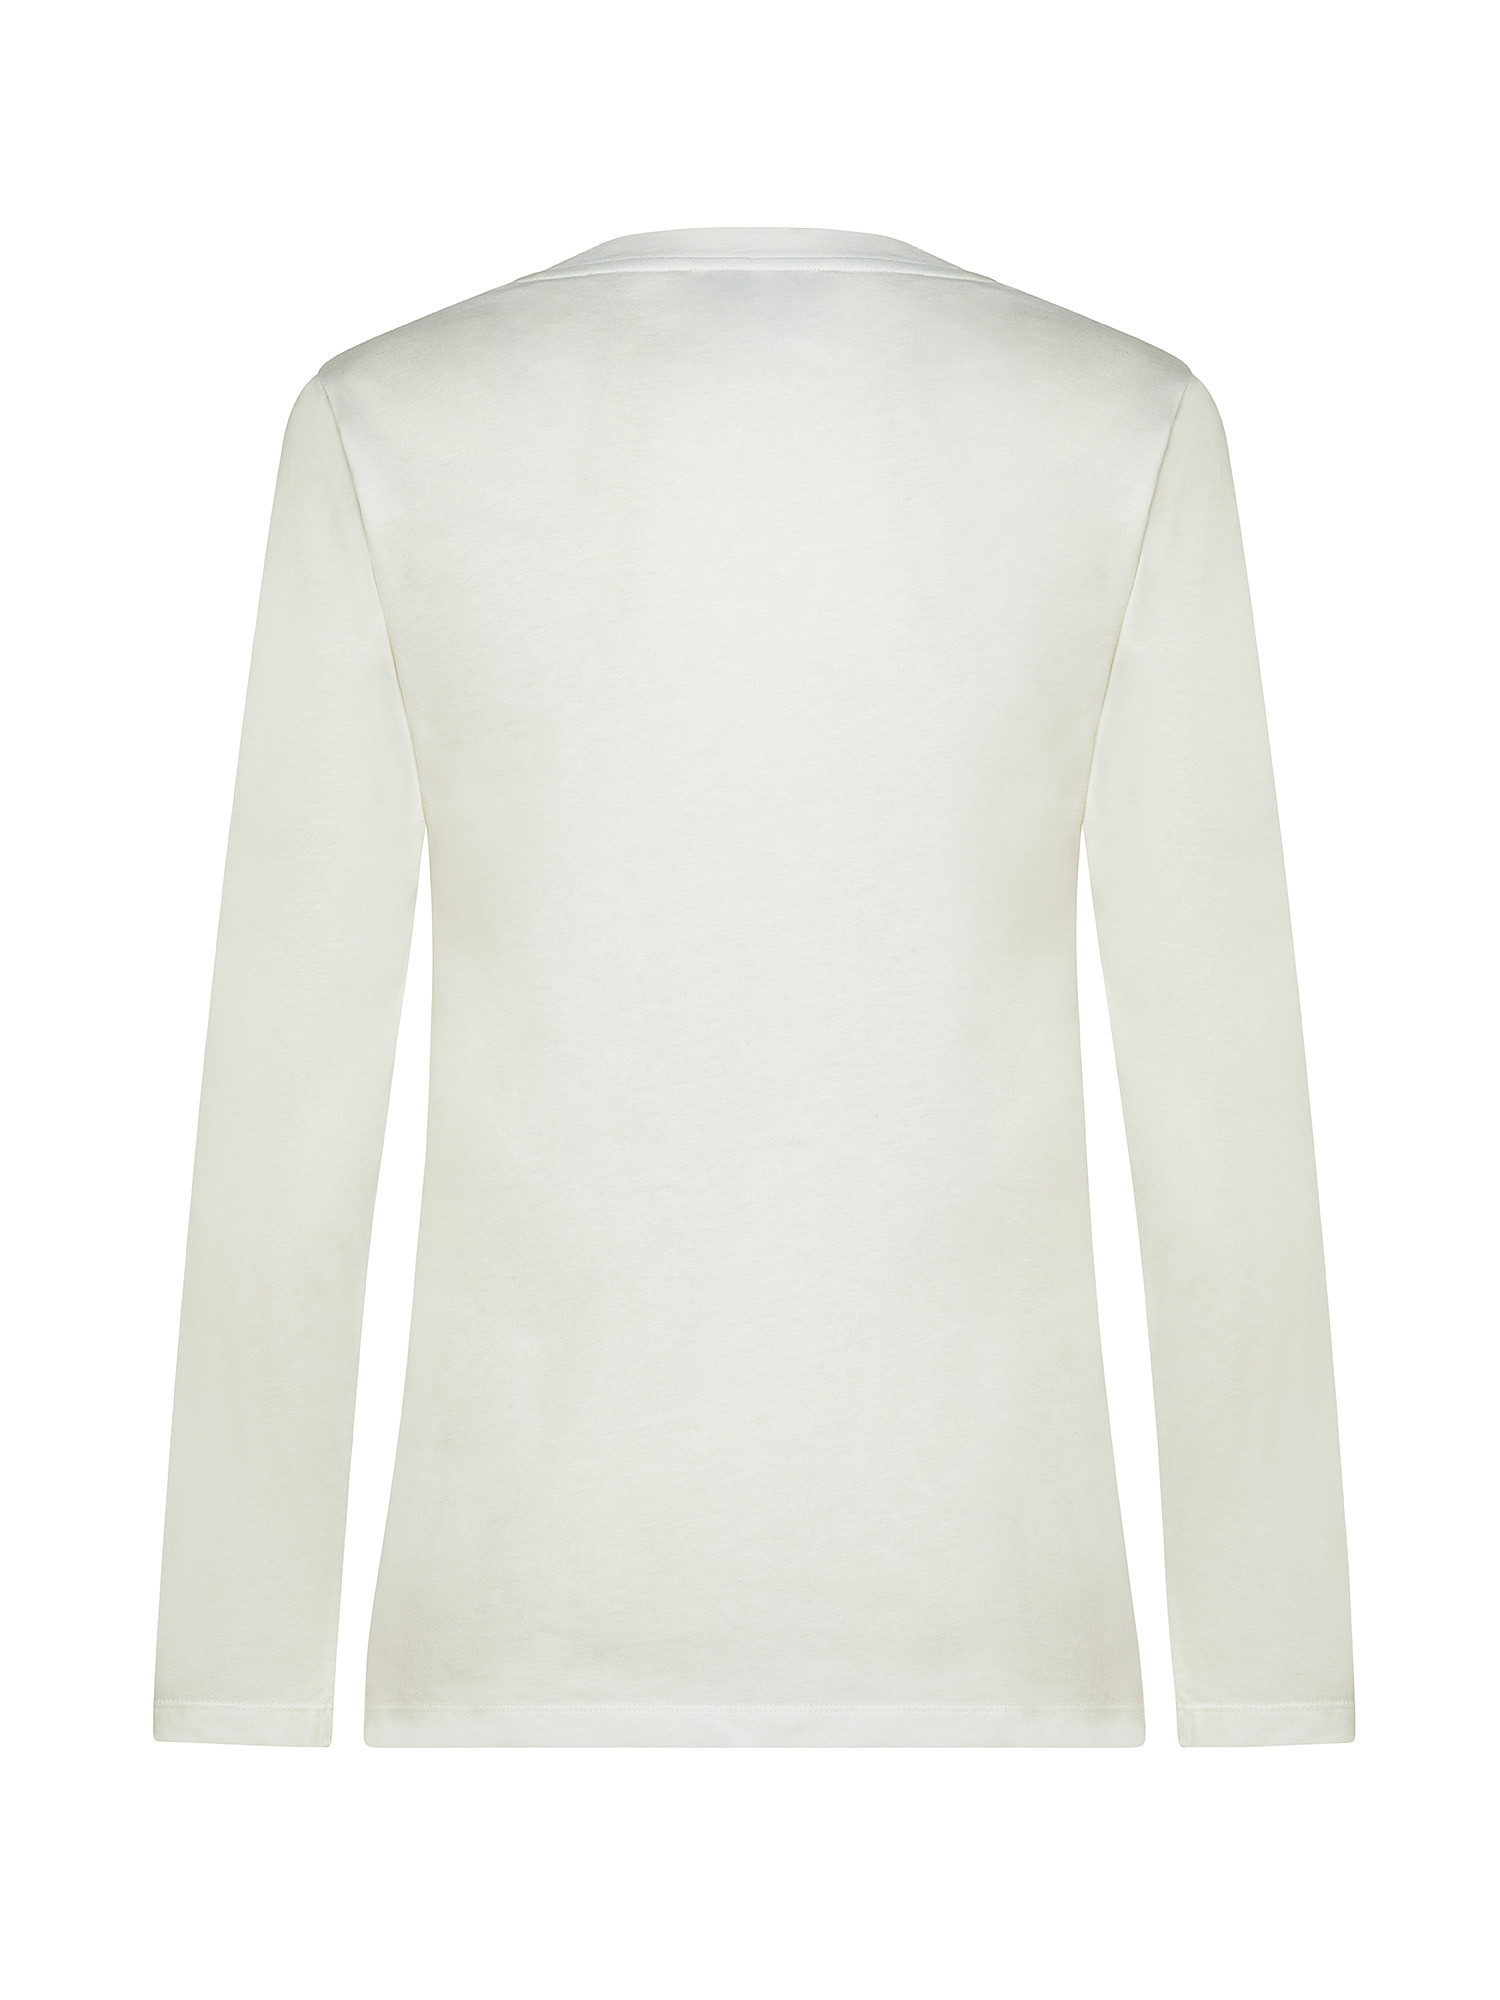 T-shirt in cotone a tinta unita, Bianco sporco, large image number 1